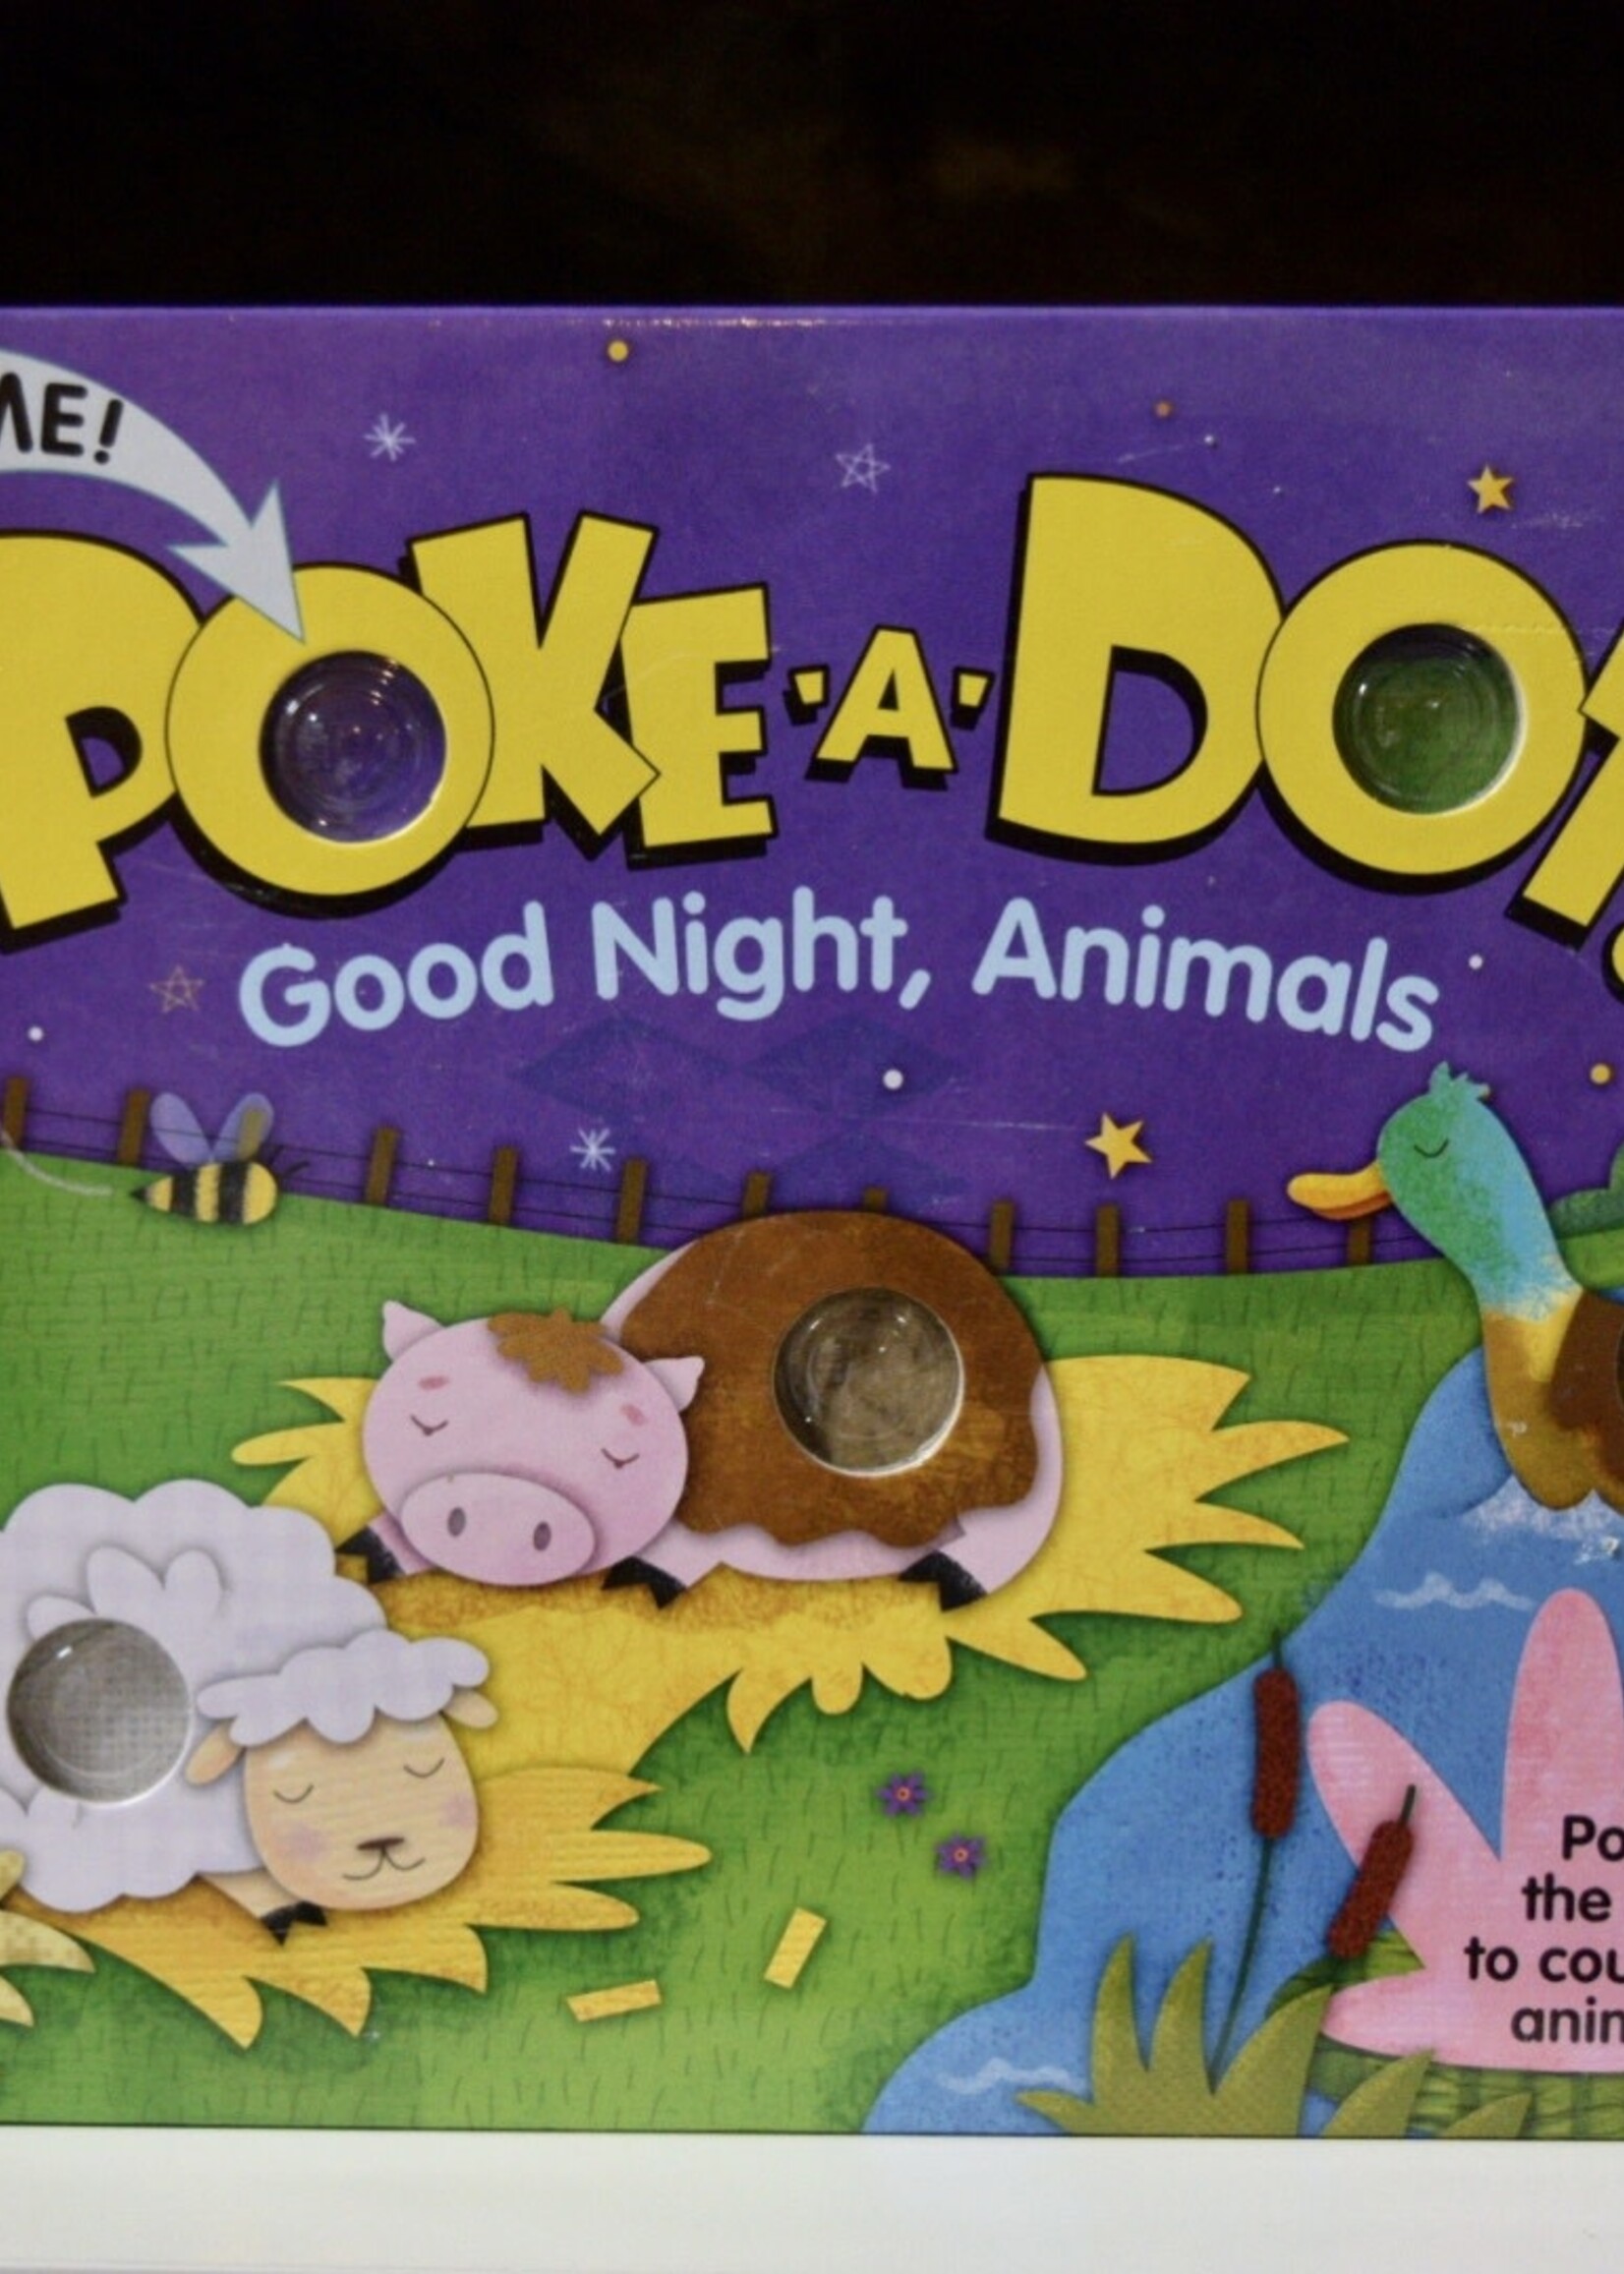 Book - Poke-a-Dot! Good Night, Animals - O'Toys